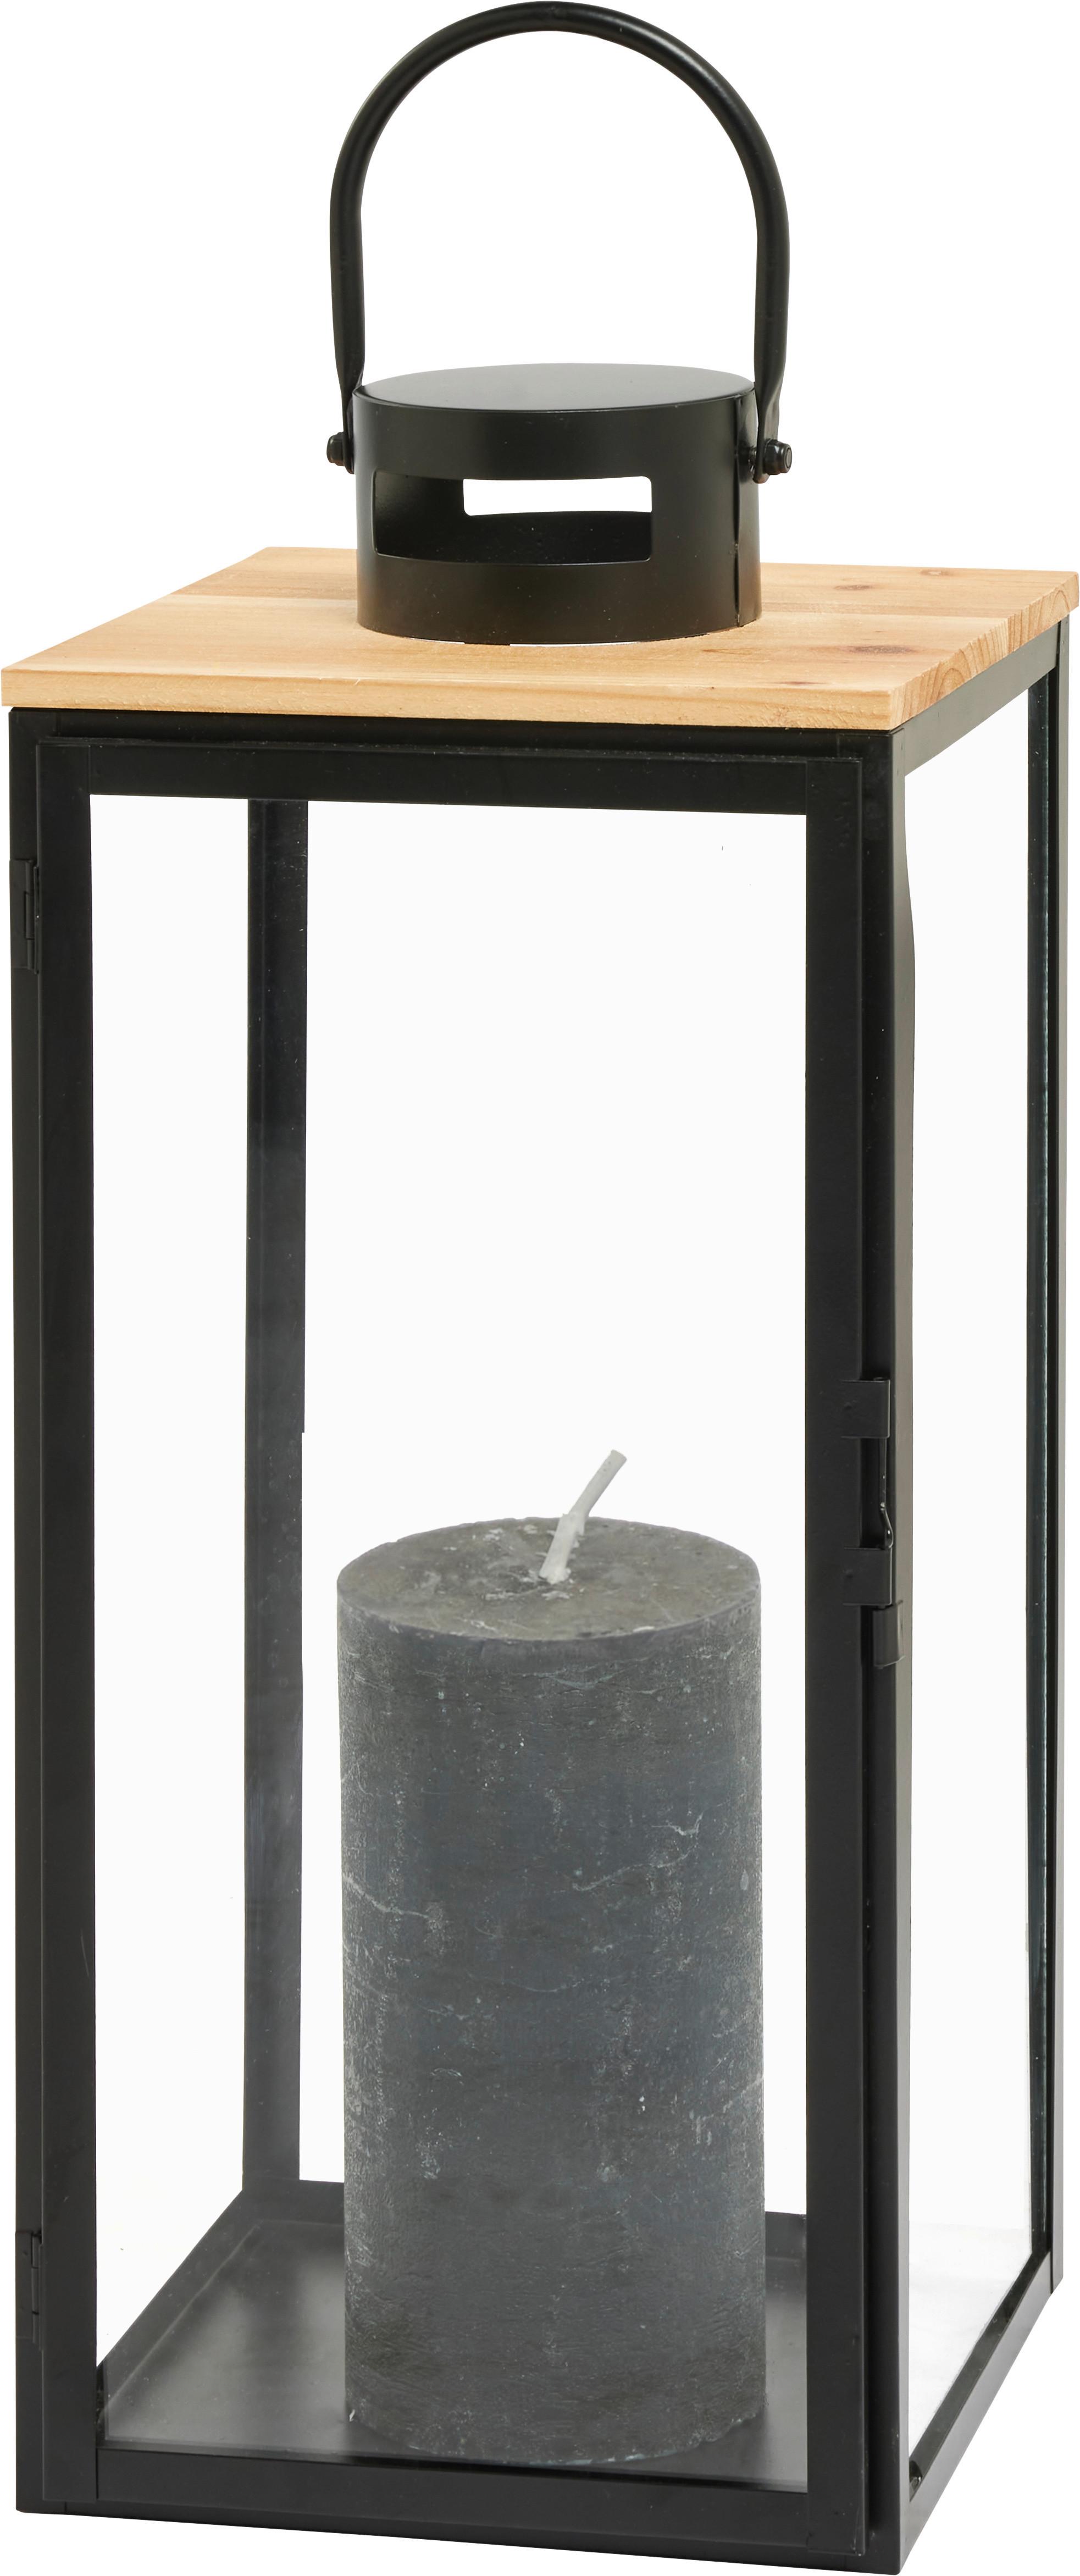 Laterna Pure -Paz- - črna, kovina/steklo (20,5/48,5/21,5cm) - Premium Living